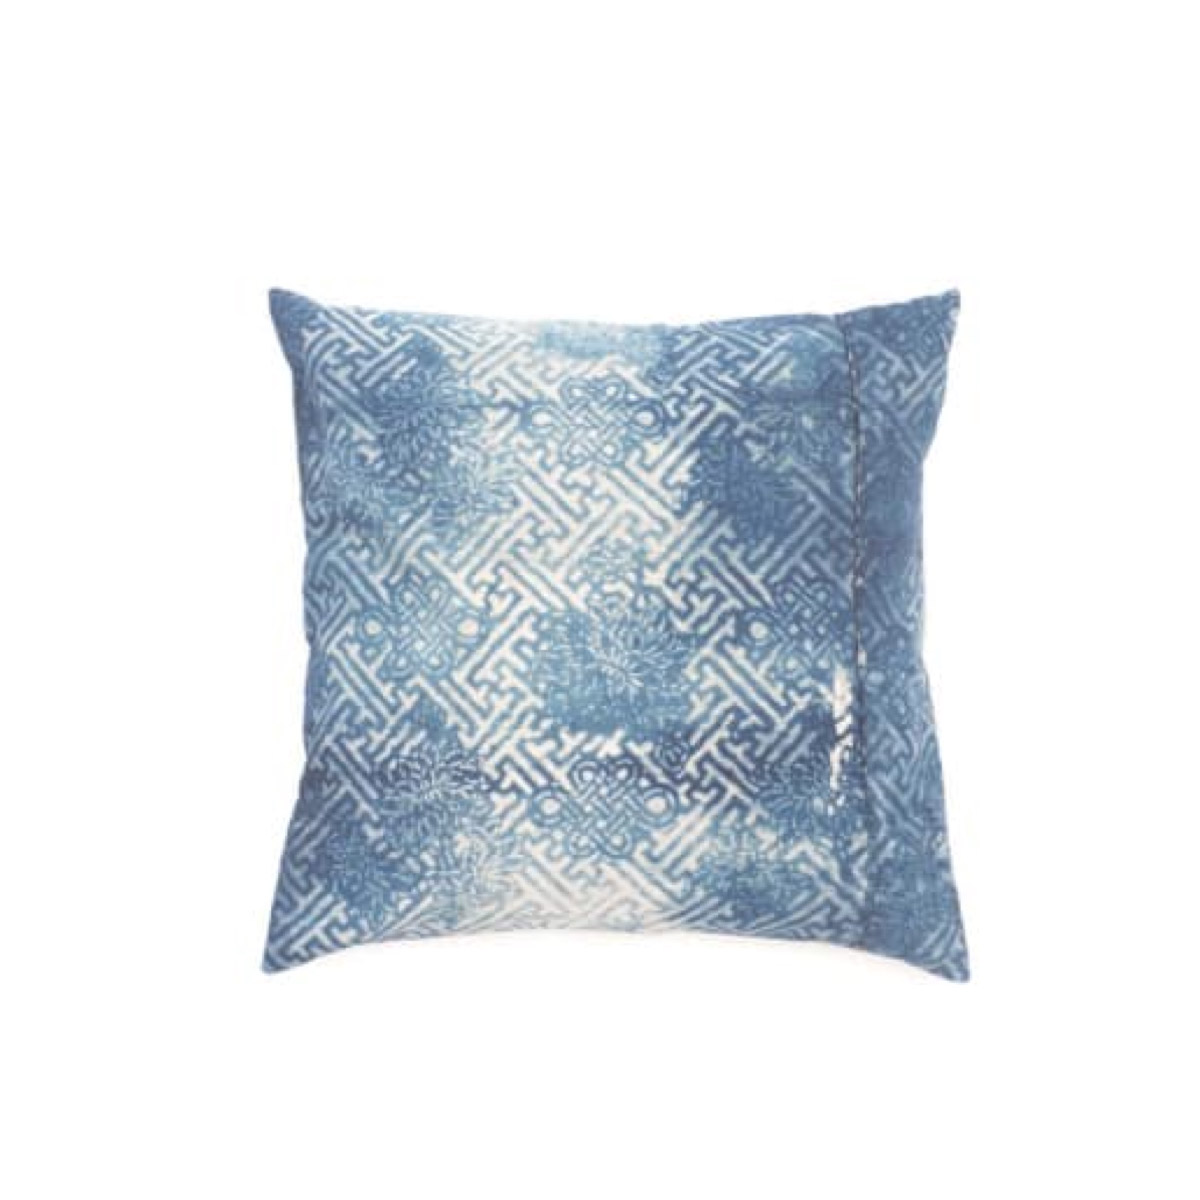 Vintage indigo cotton cushion